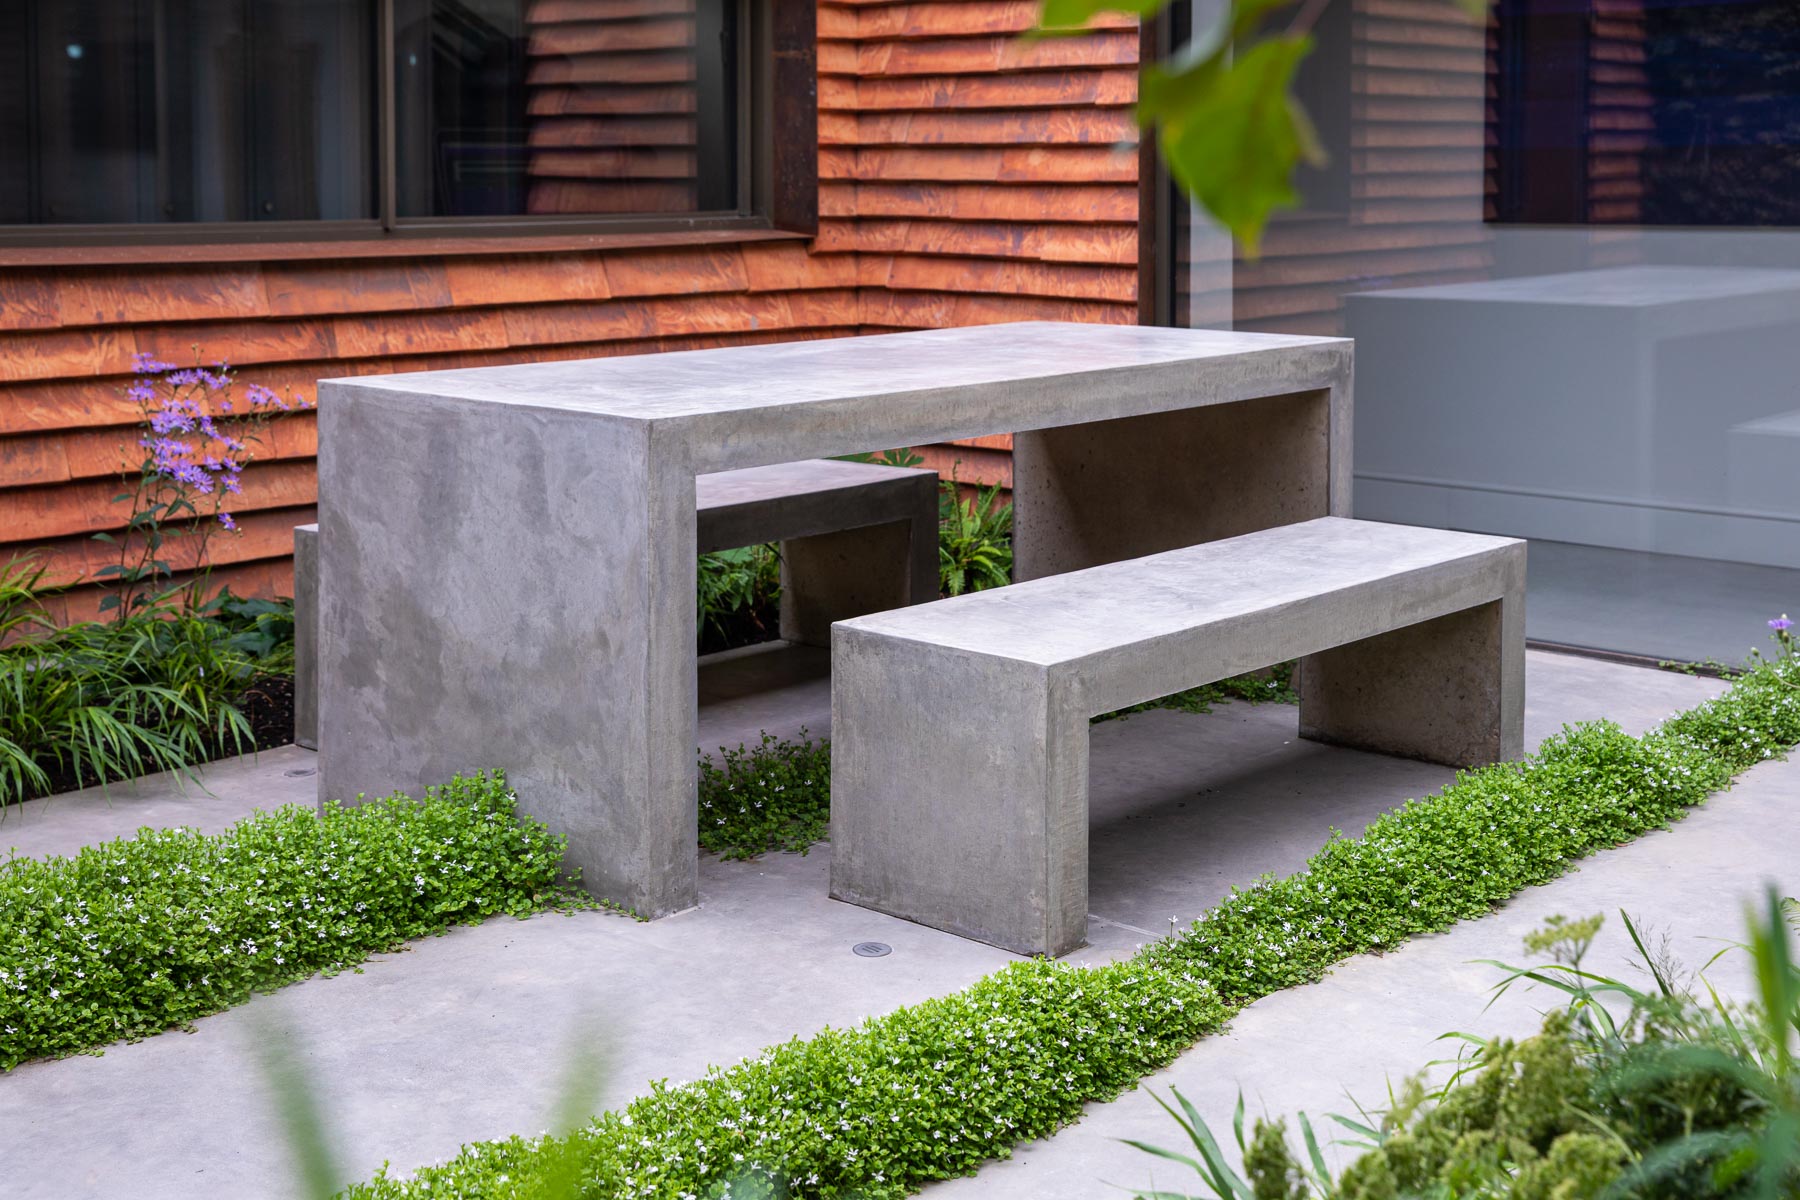 Colm Joseph Cambridge garden design modern courtyard concrete furniture table and benches planted concrete paving joints pratia treadwellii